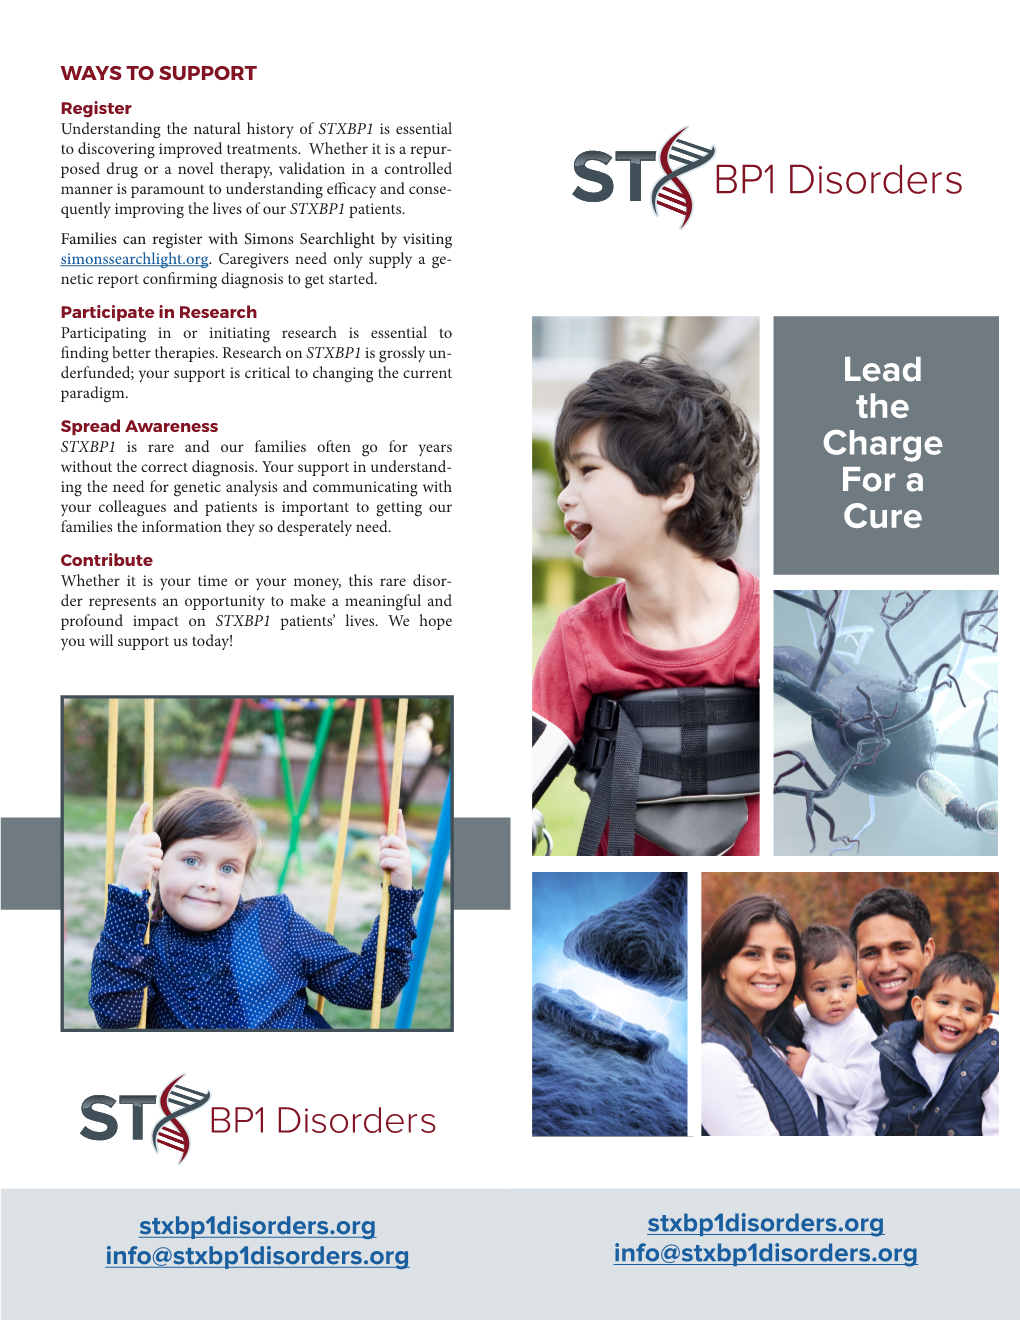 STXBP1 Disorders Scientific